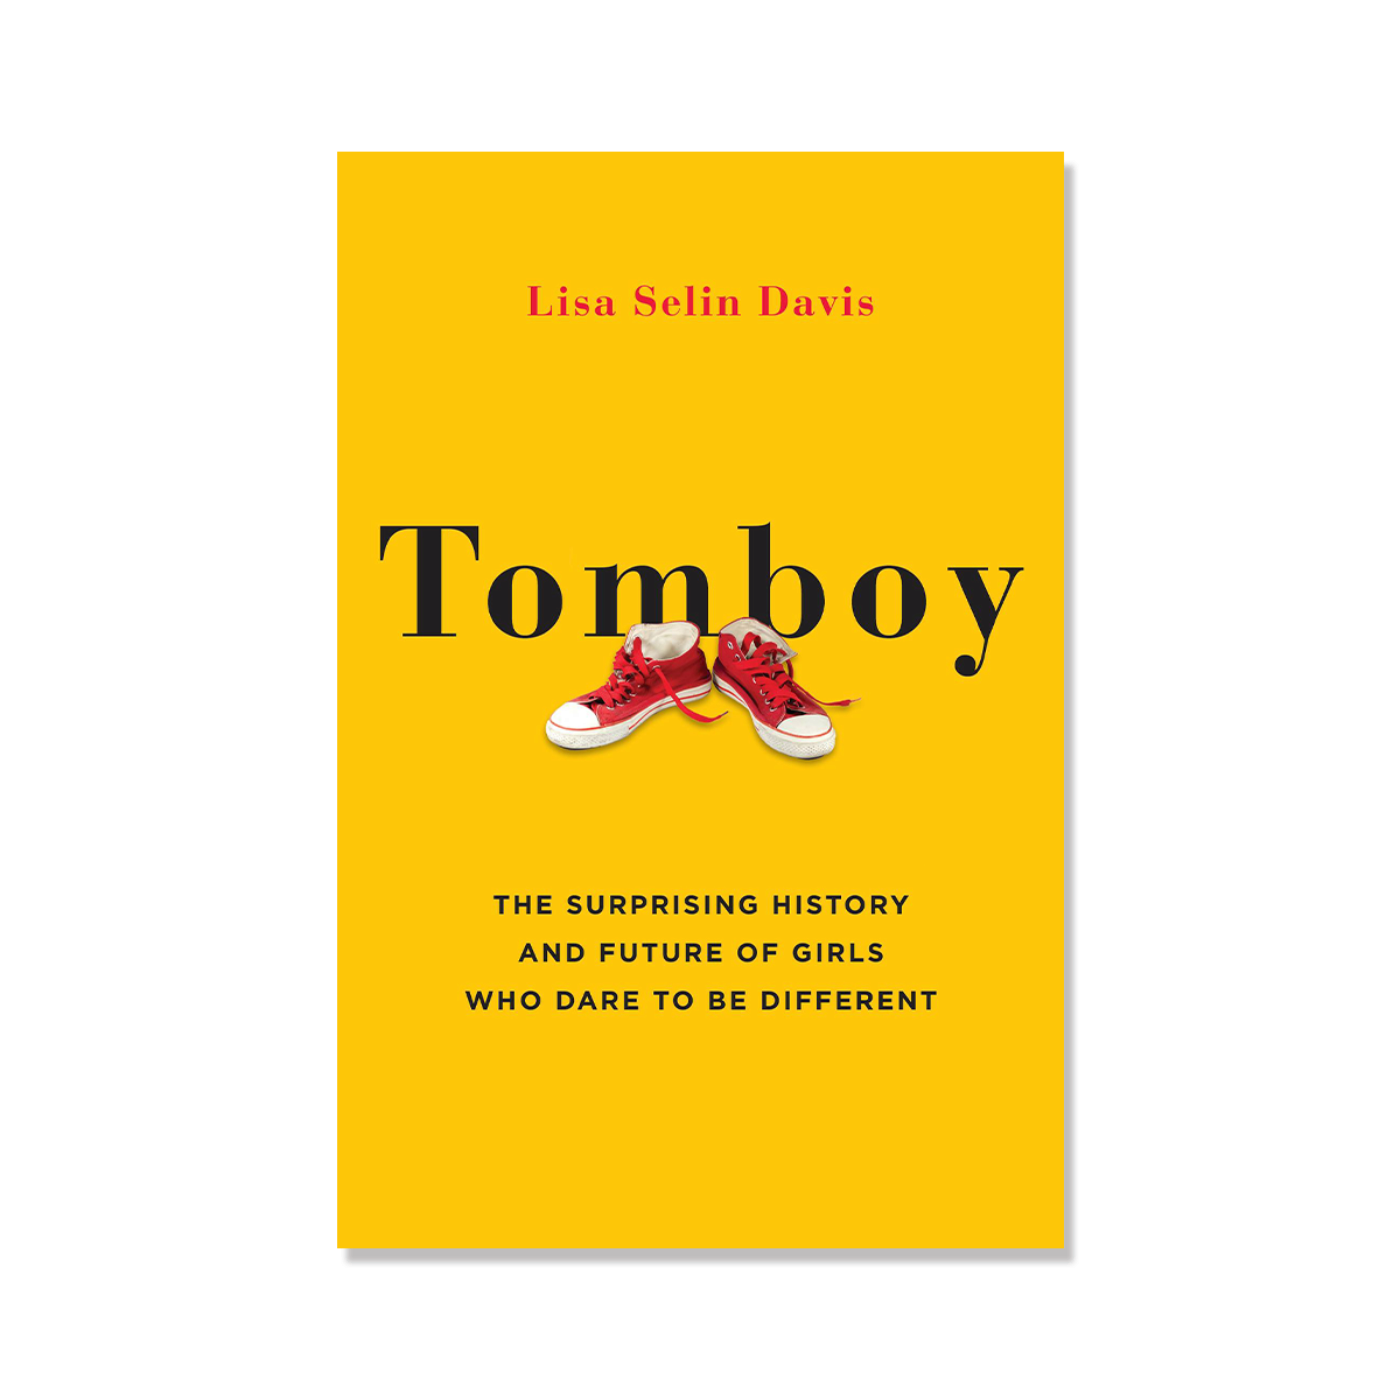 Tomboy by Lisa Selin Davis